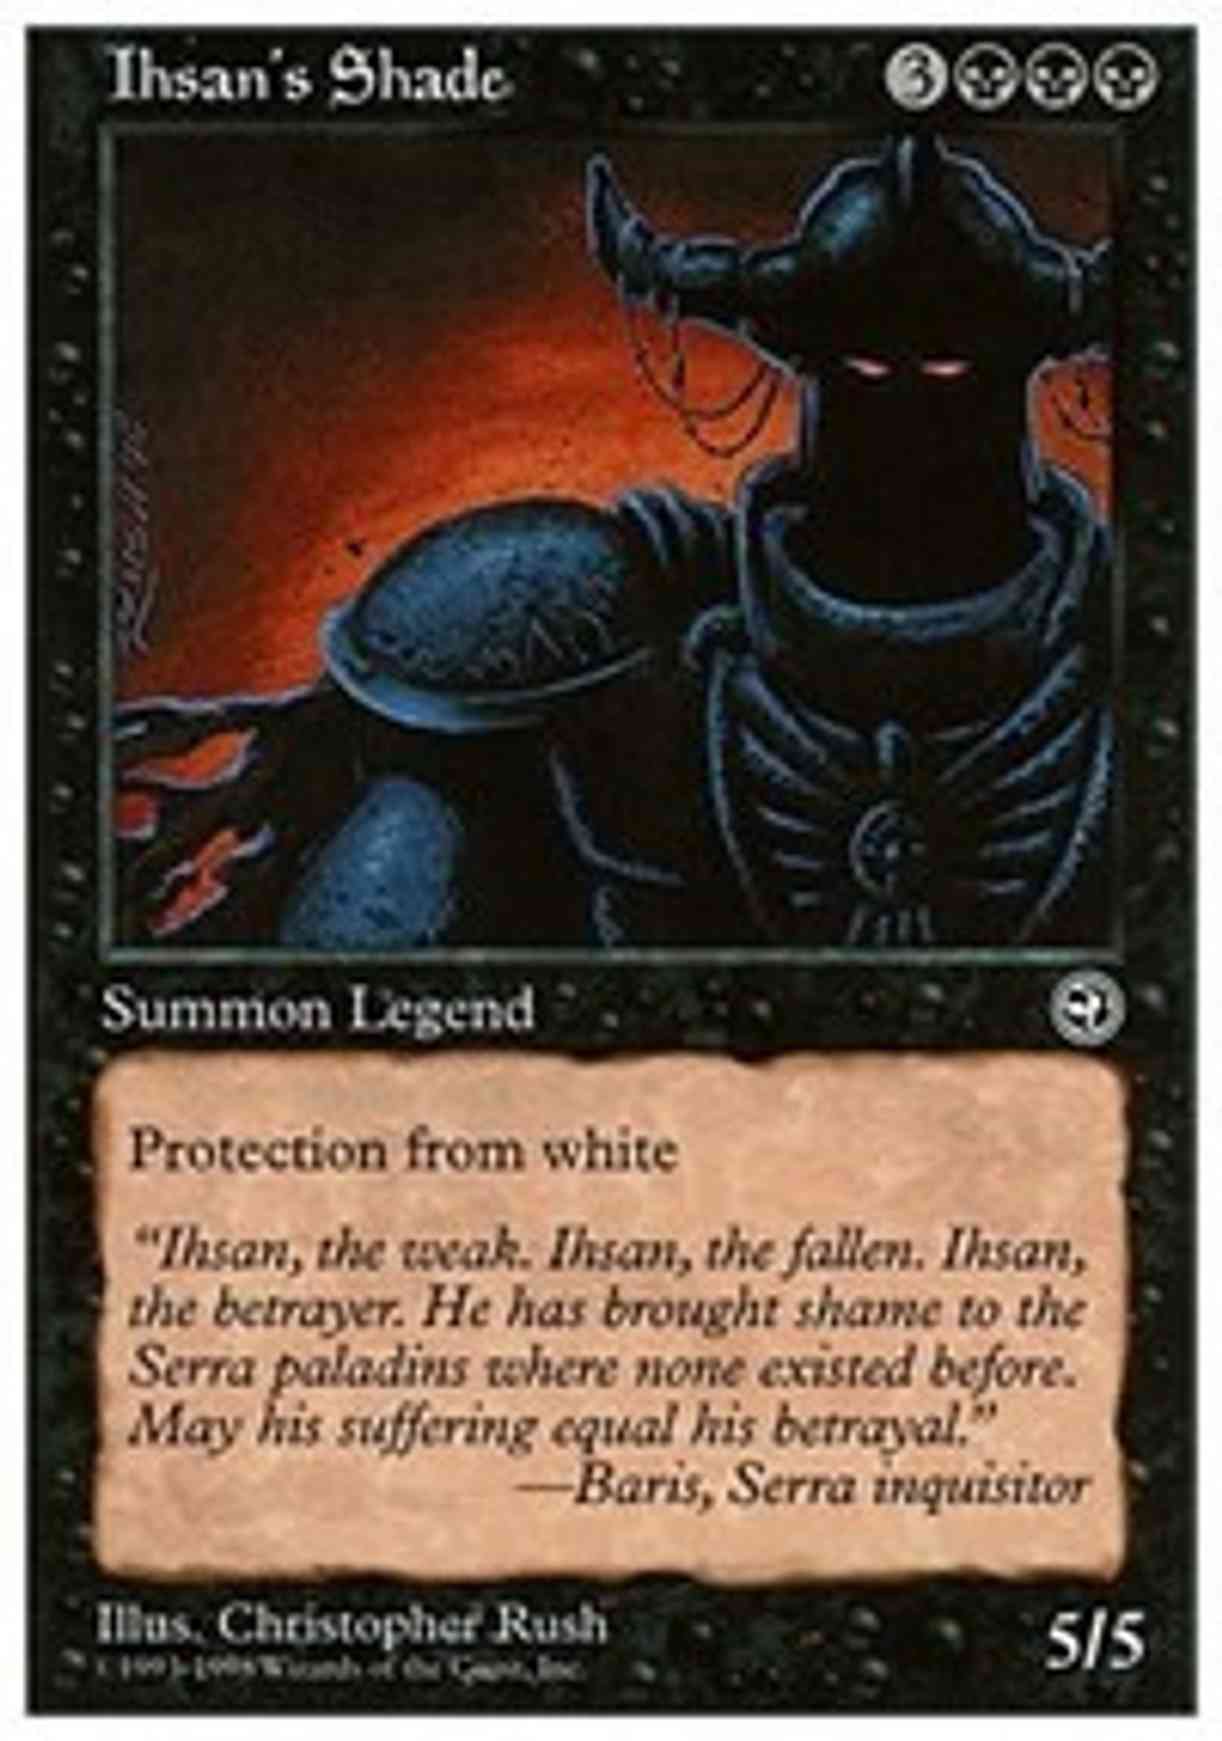 Ihsan's Shade magic card front